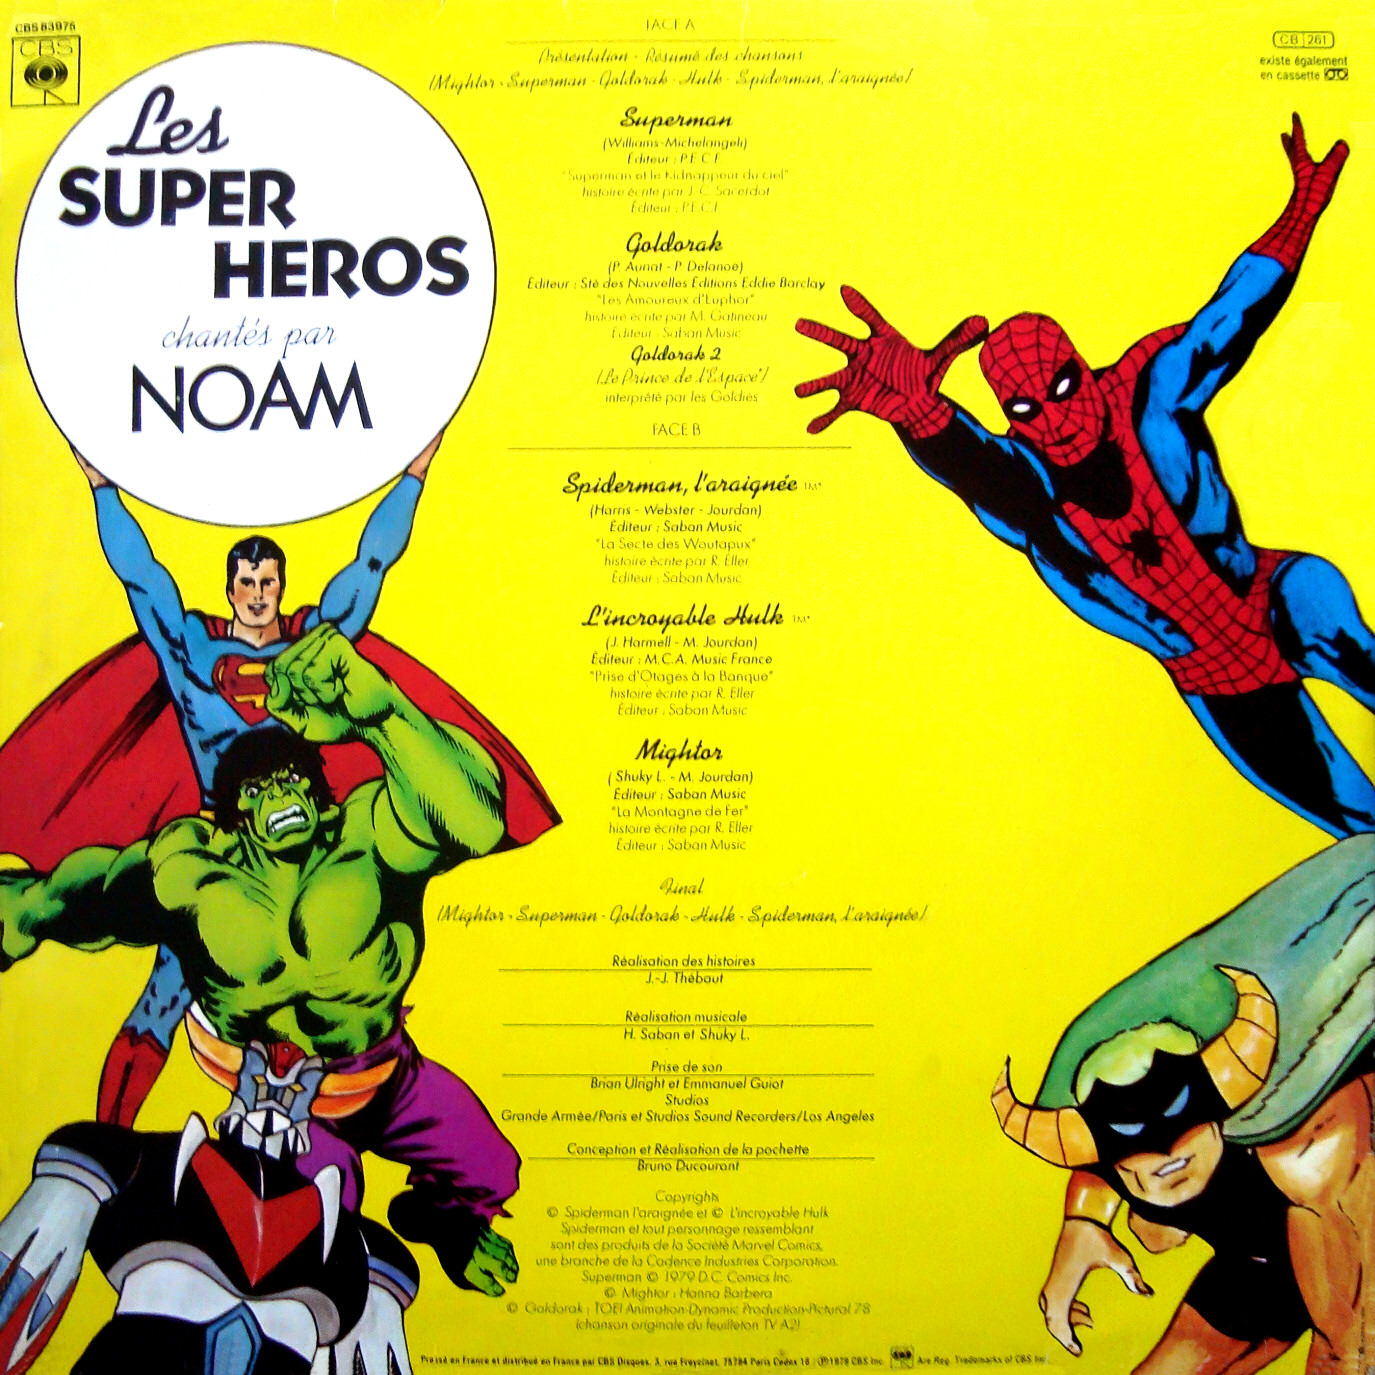 pochette 33 tours - Les Super Heros - Noam